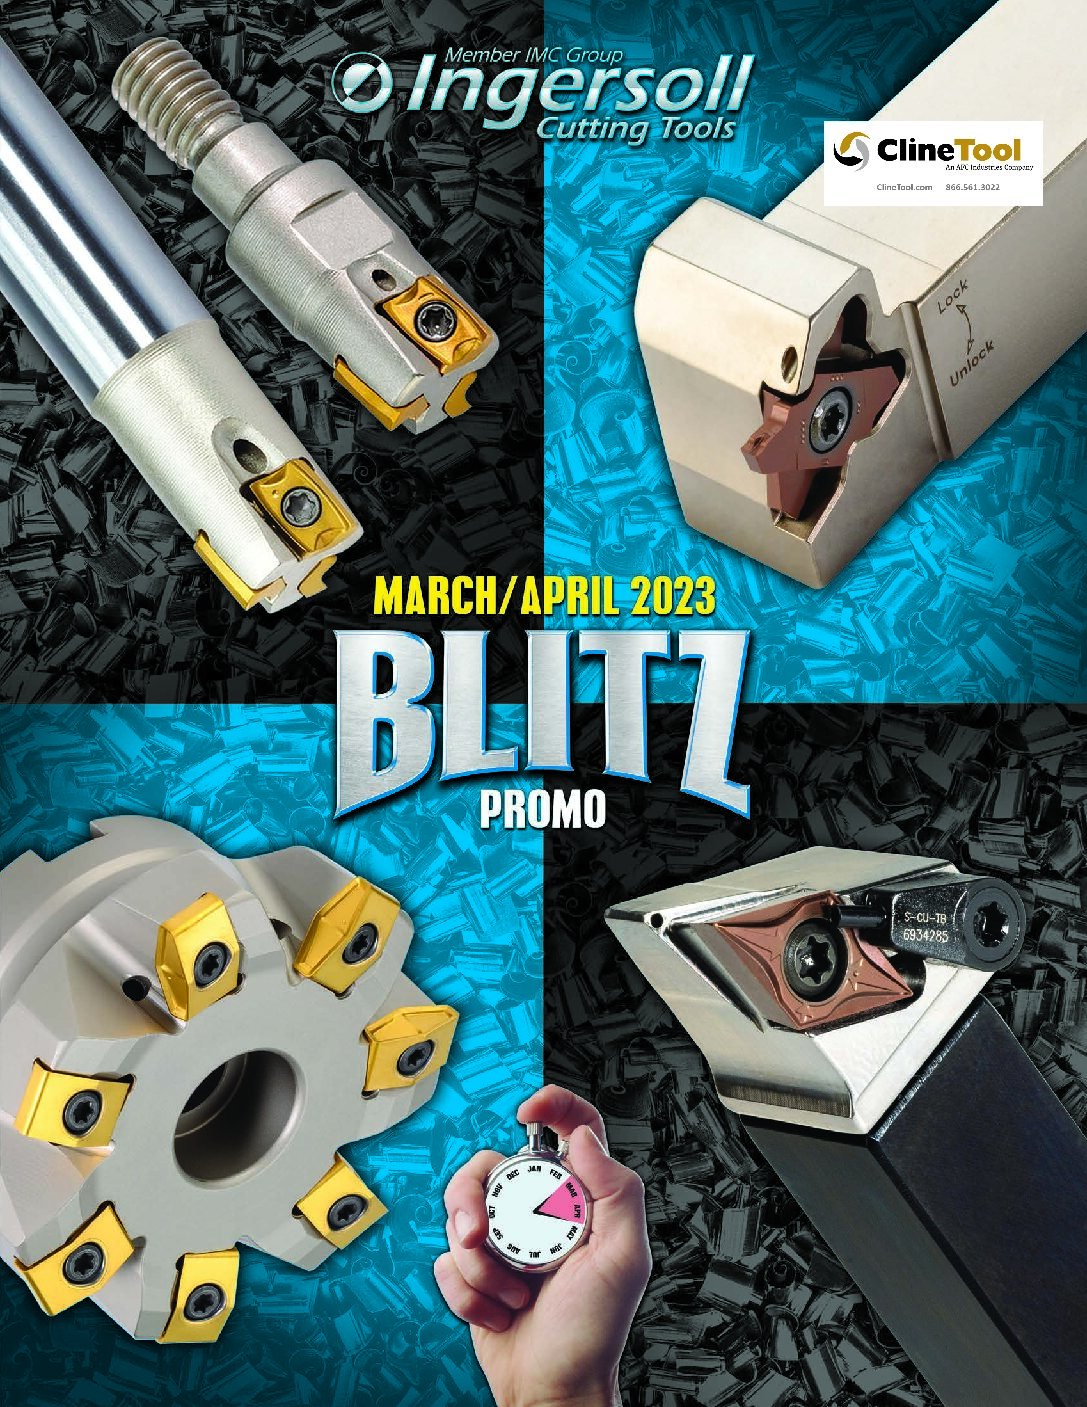 Ingersoll Blitz Promo – Expires April 28,2023